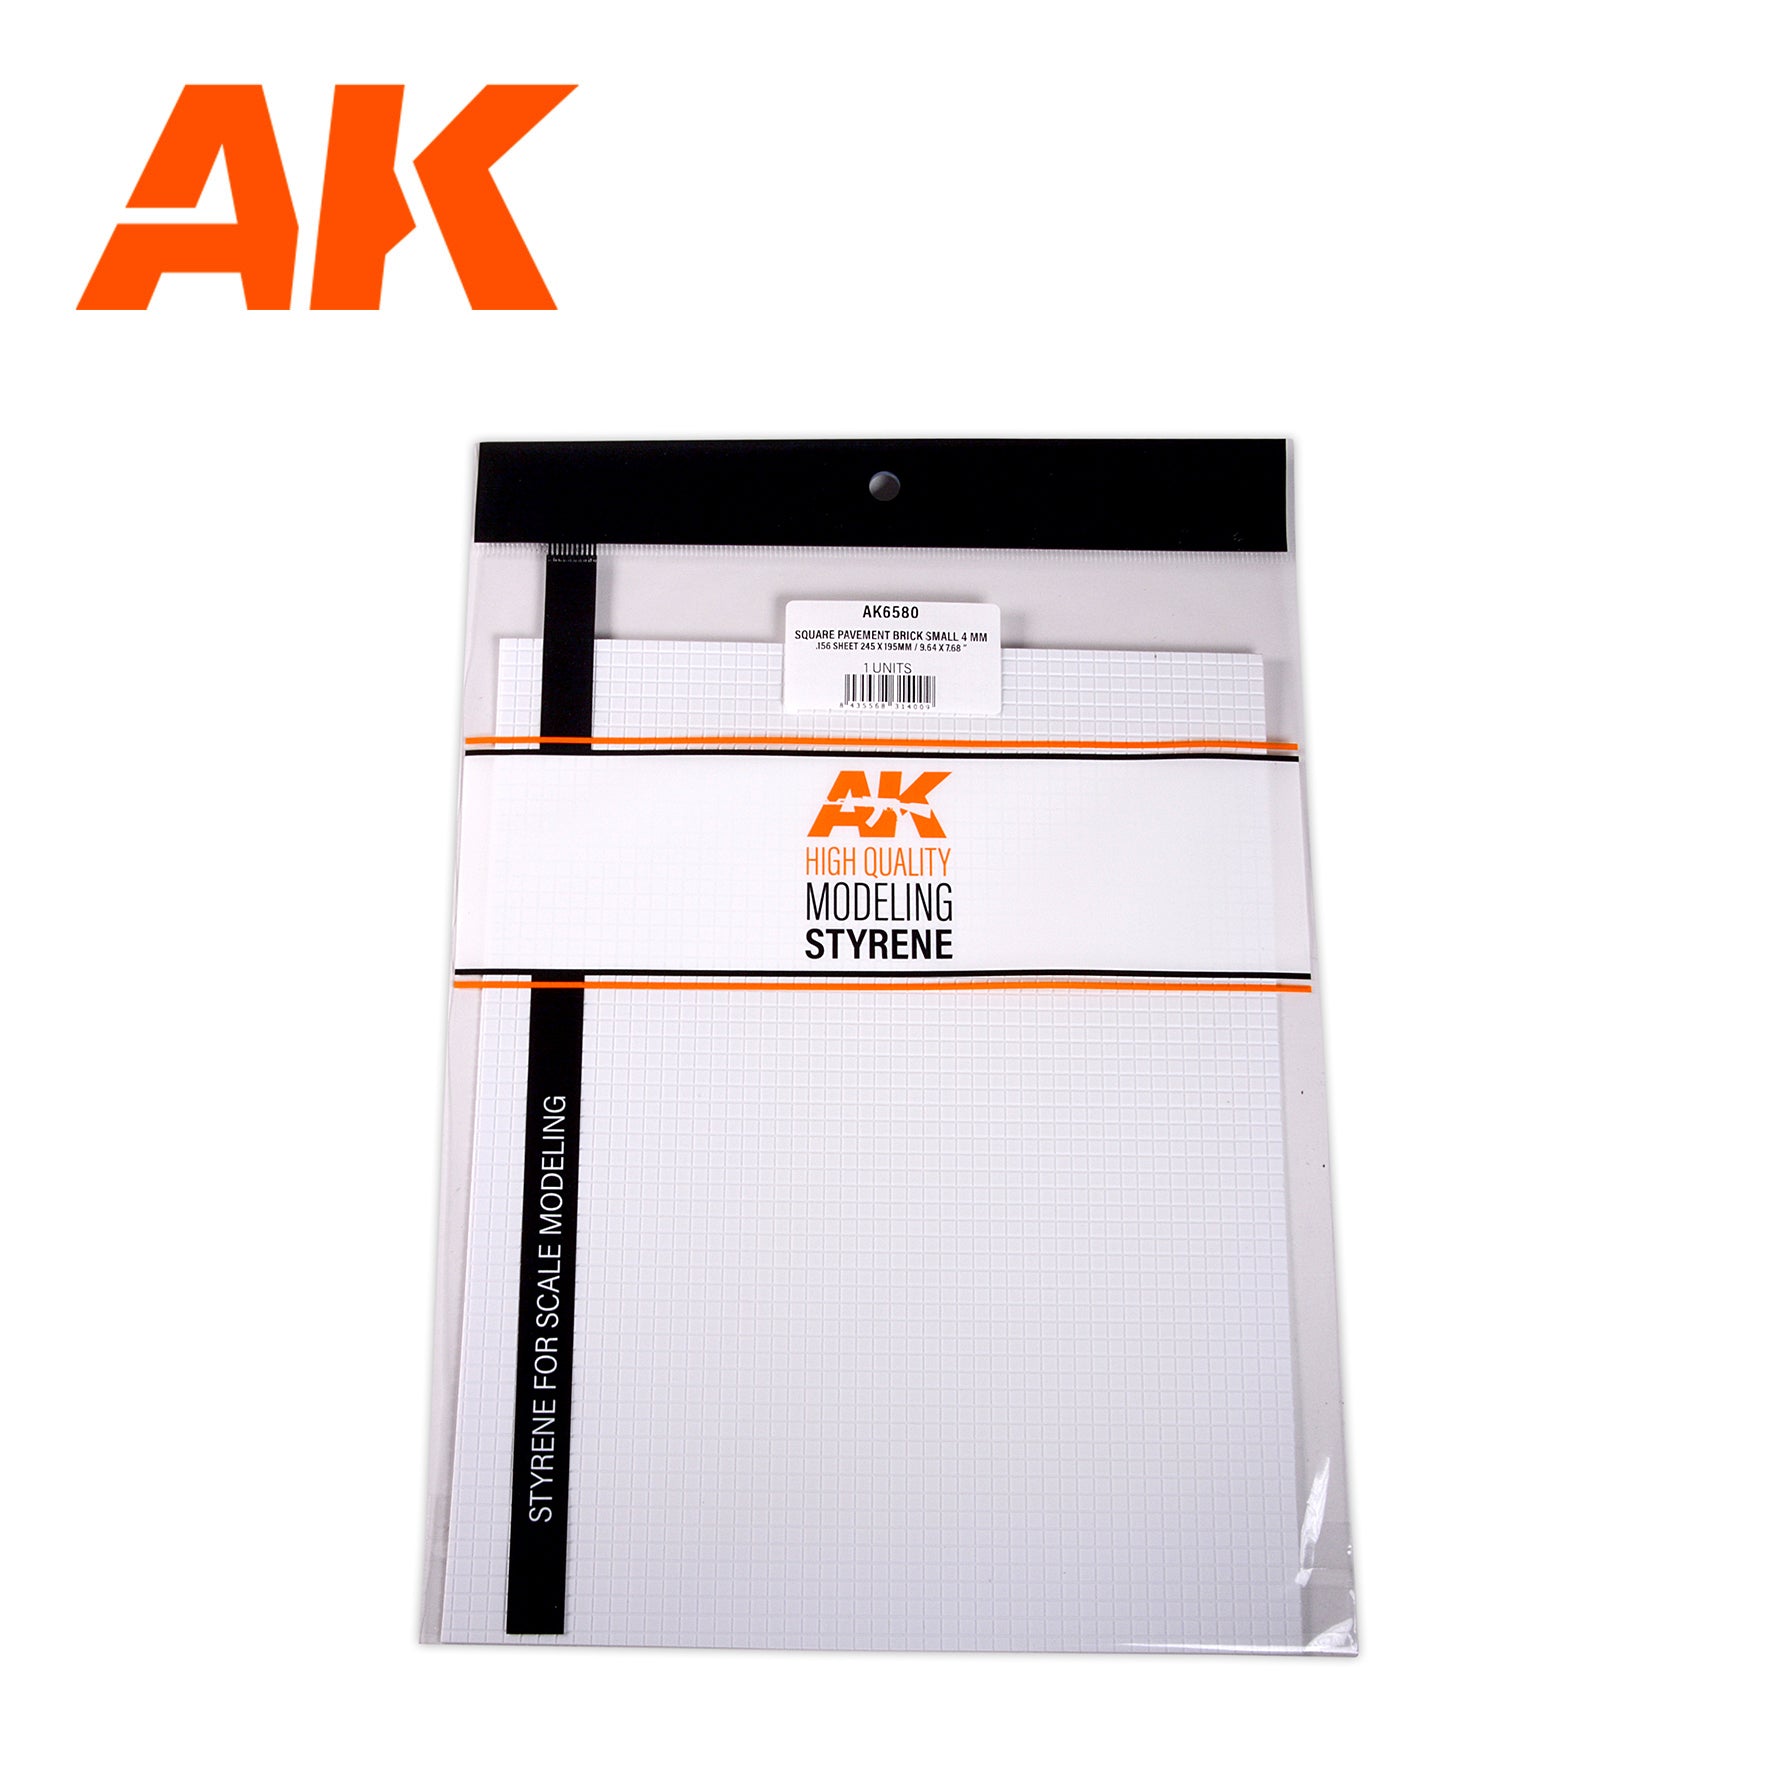 AK6580 - Square Pavement Brick SMALL - 4mm/156 sheets - 245 x 195